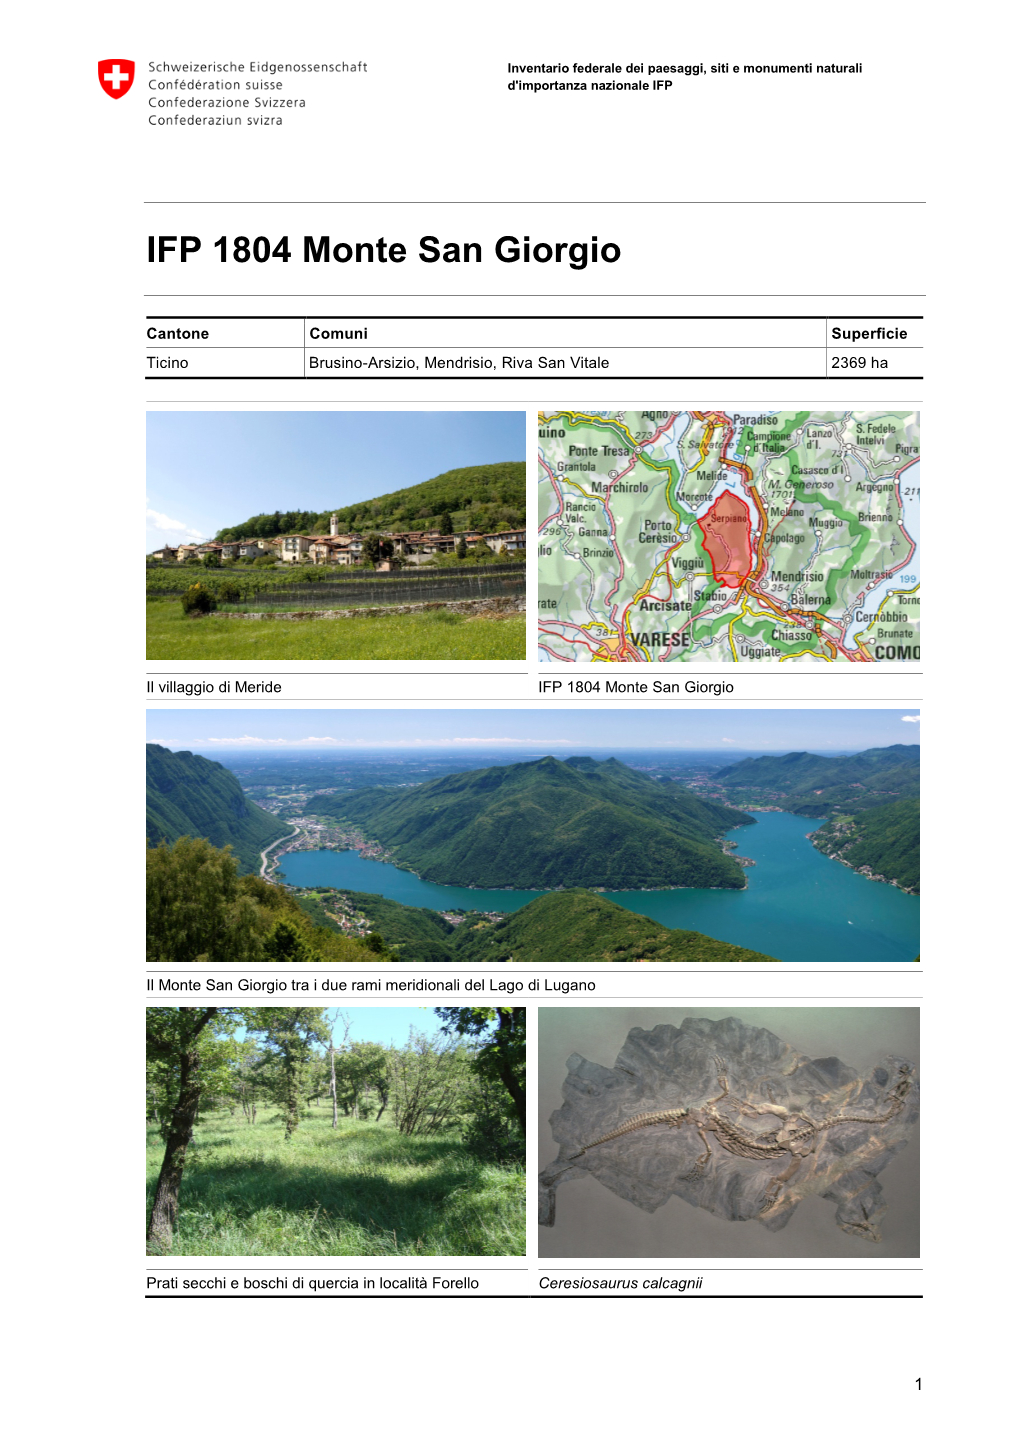 IFP 1804 Monte San Giorgio